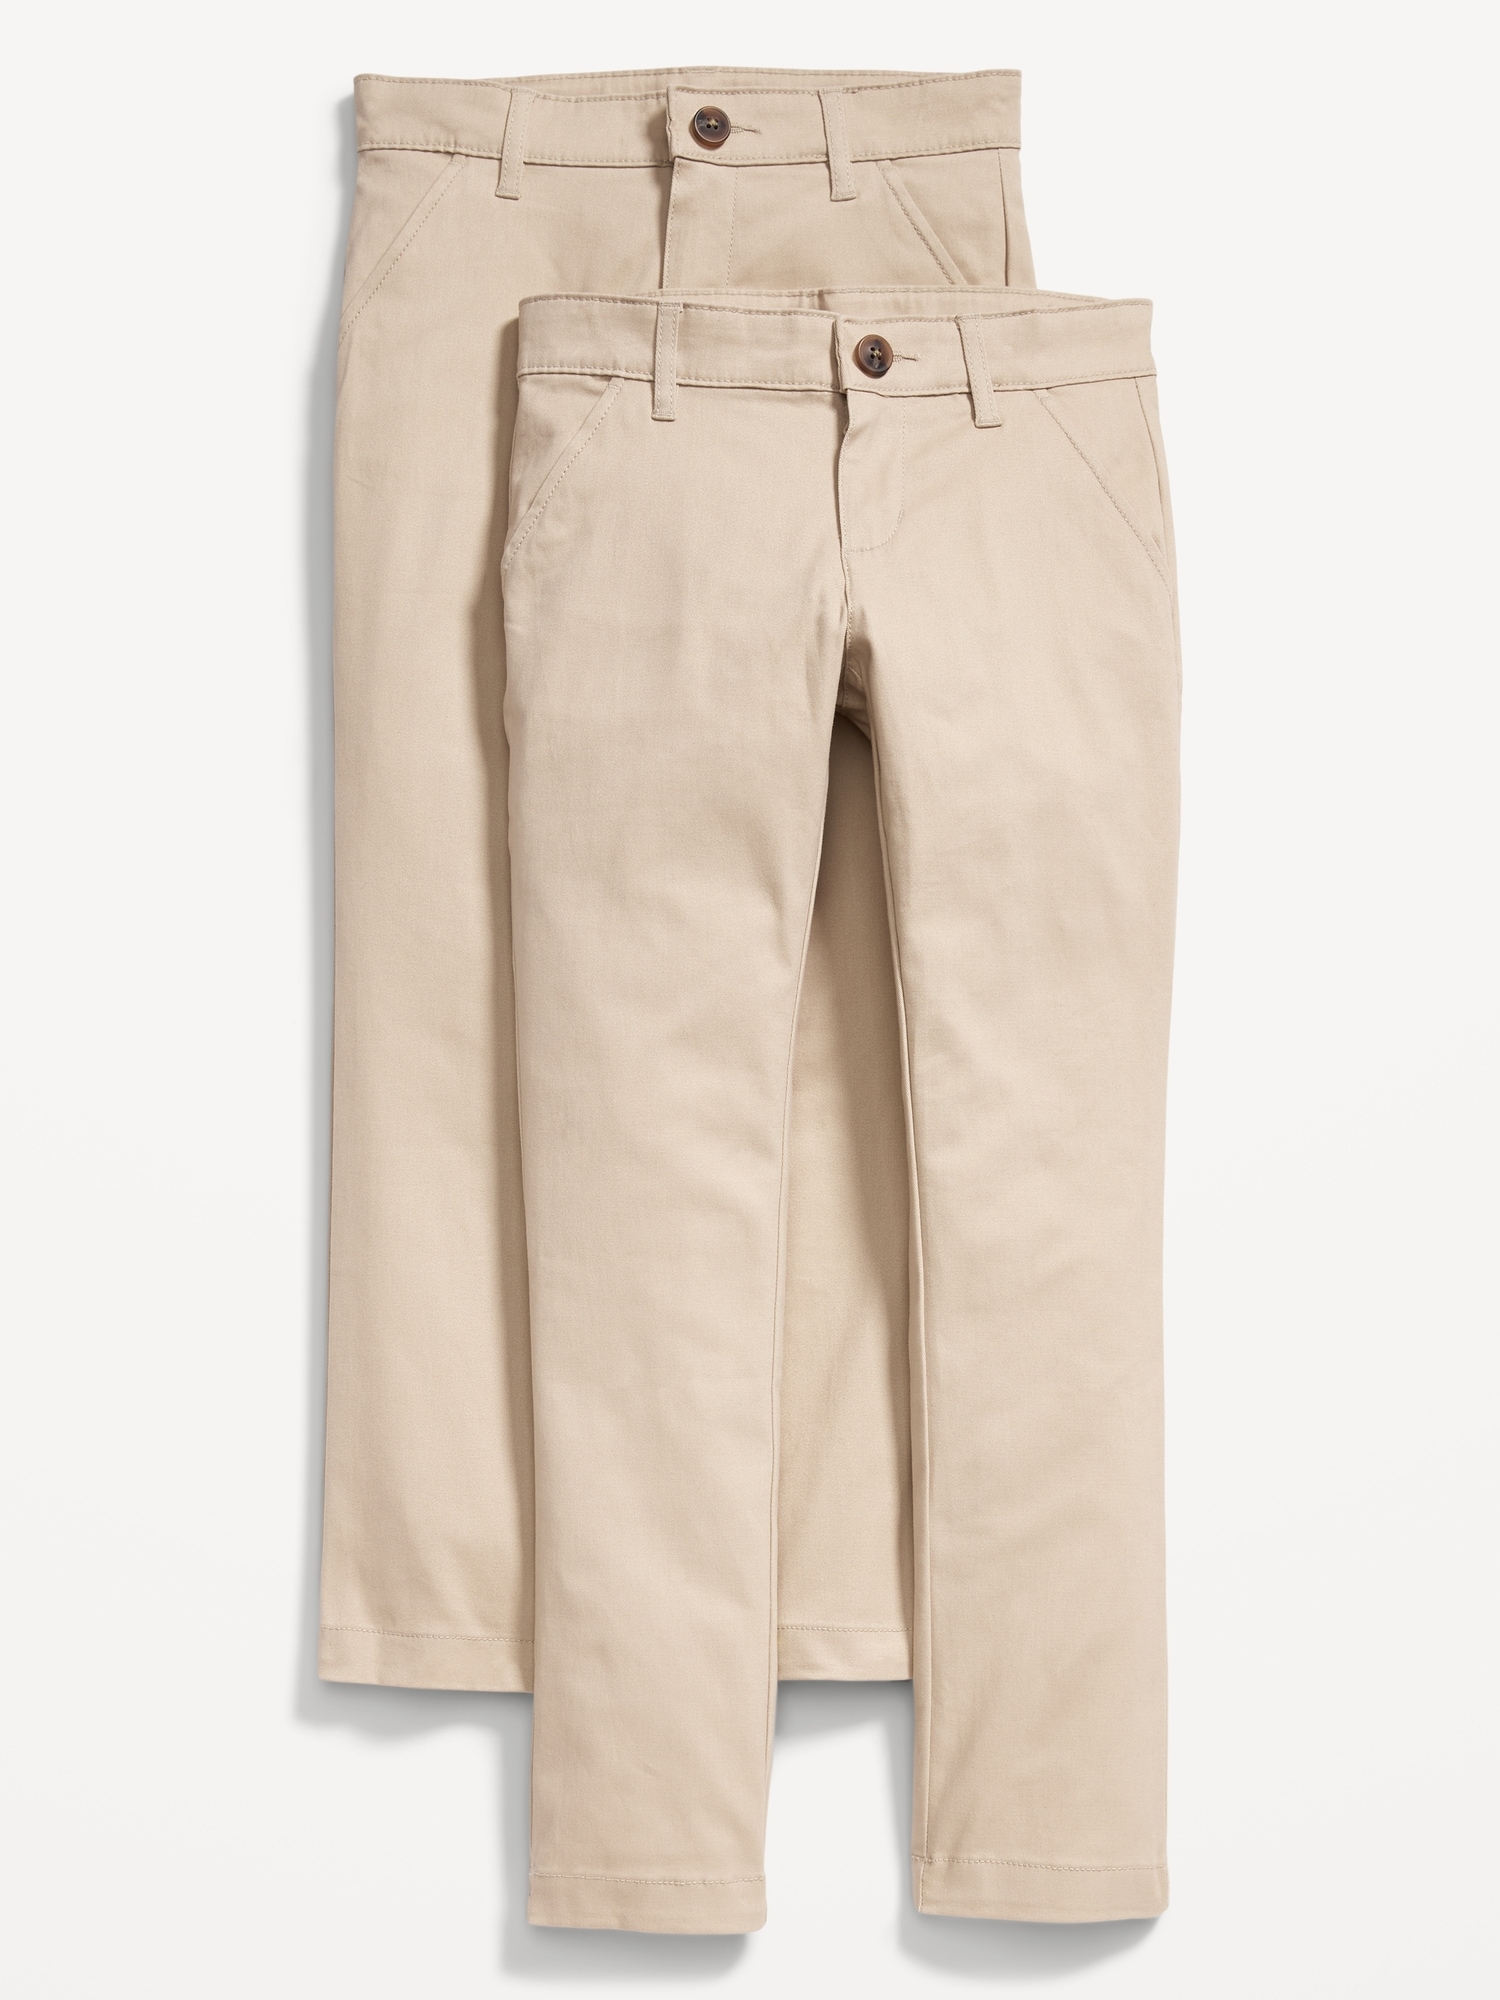 Men Formal Blue Polyester School Uniform Pant Size Medium Waist Size 38